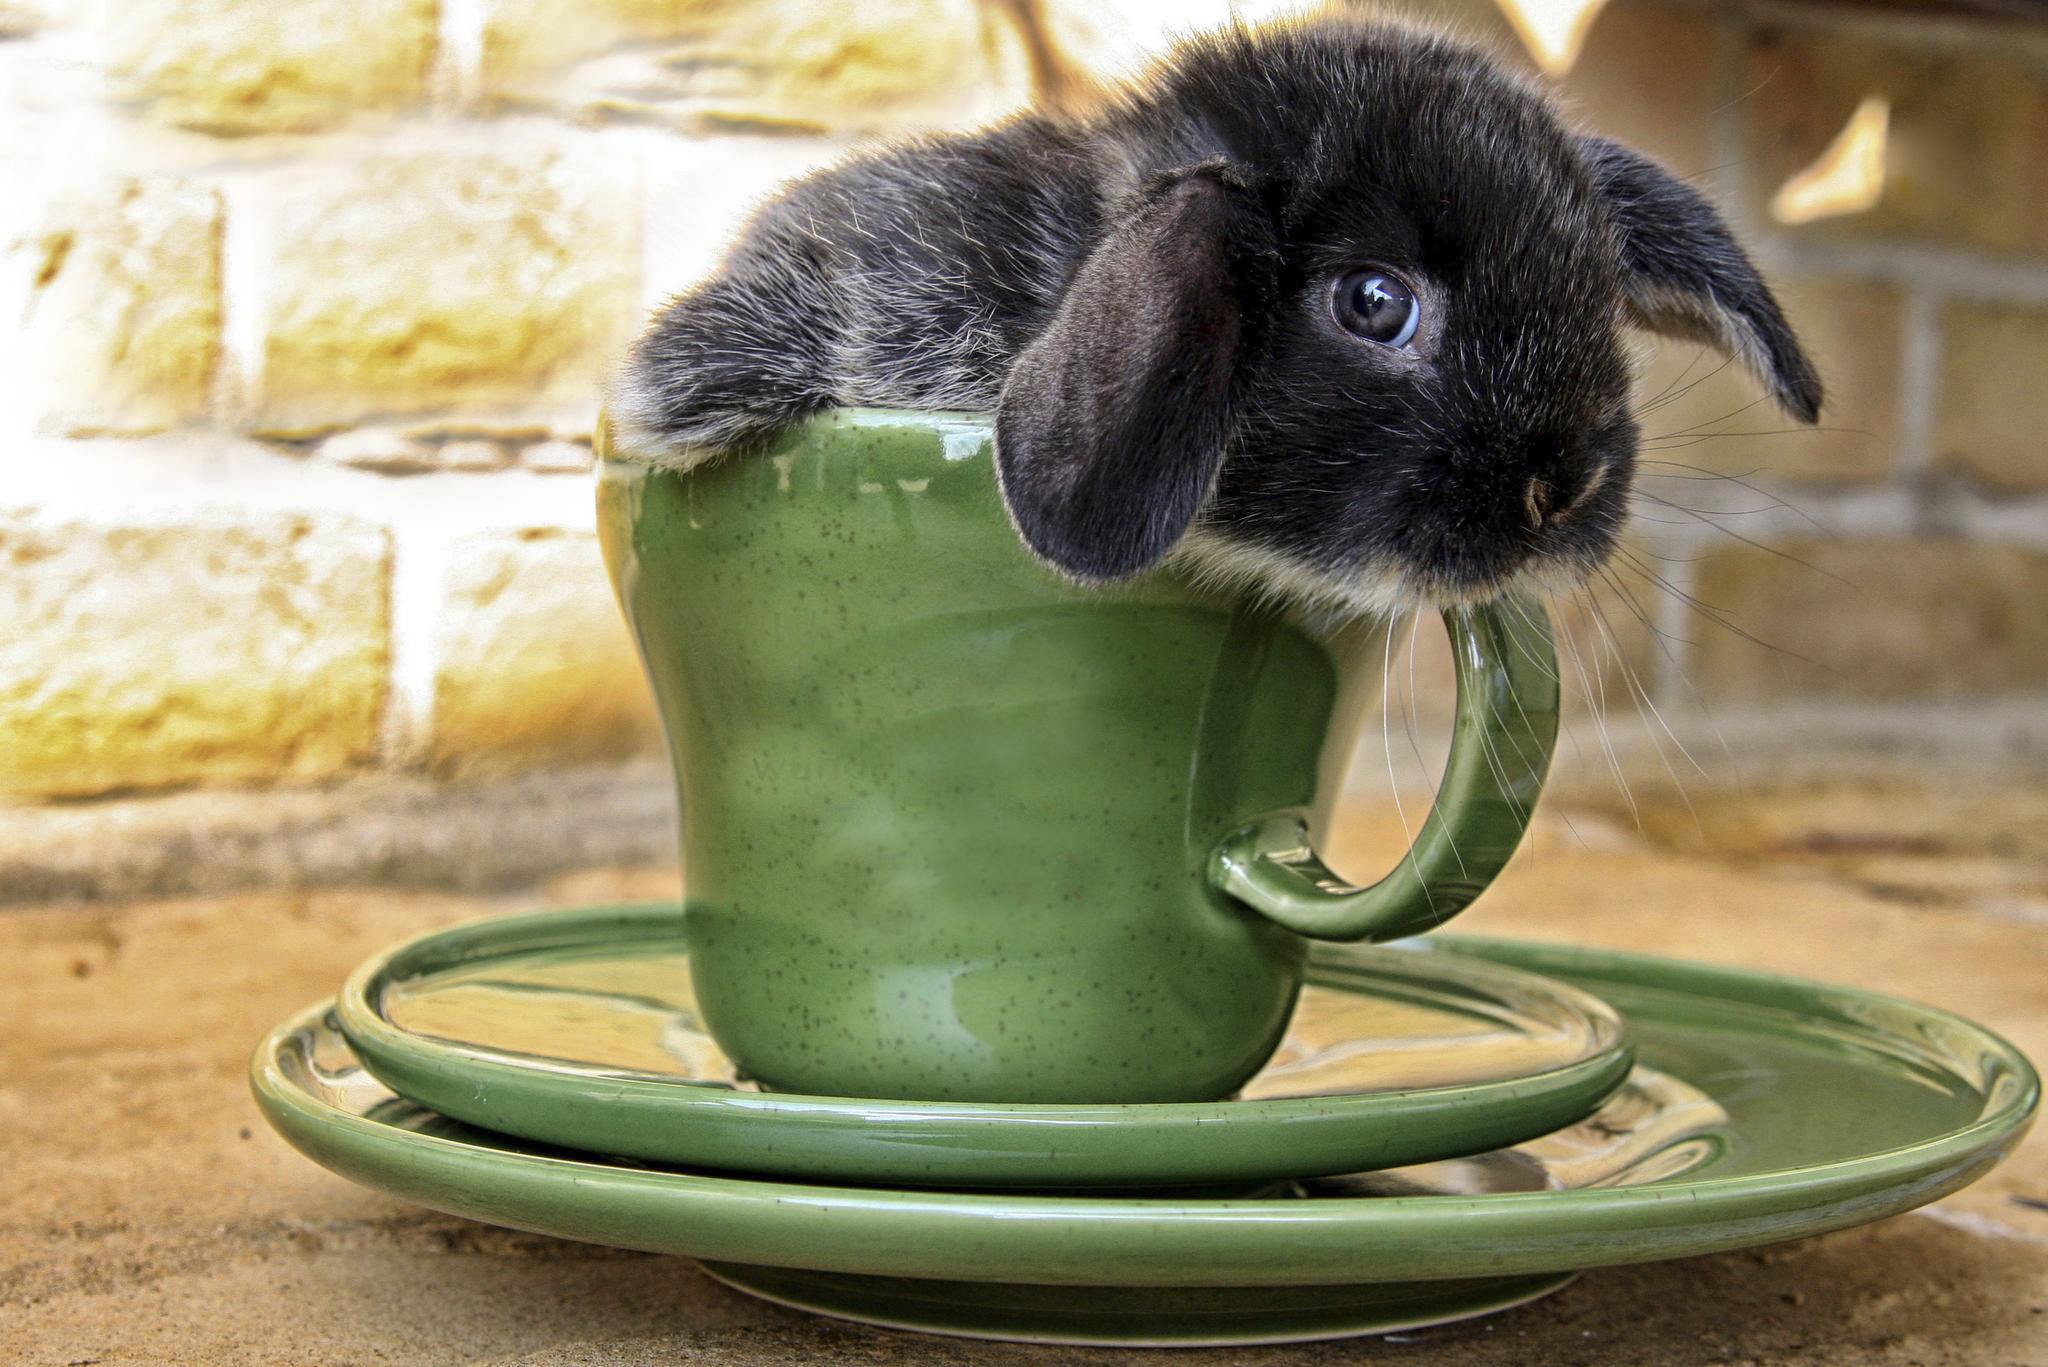 Rabbit cup